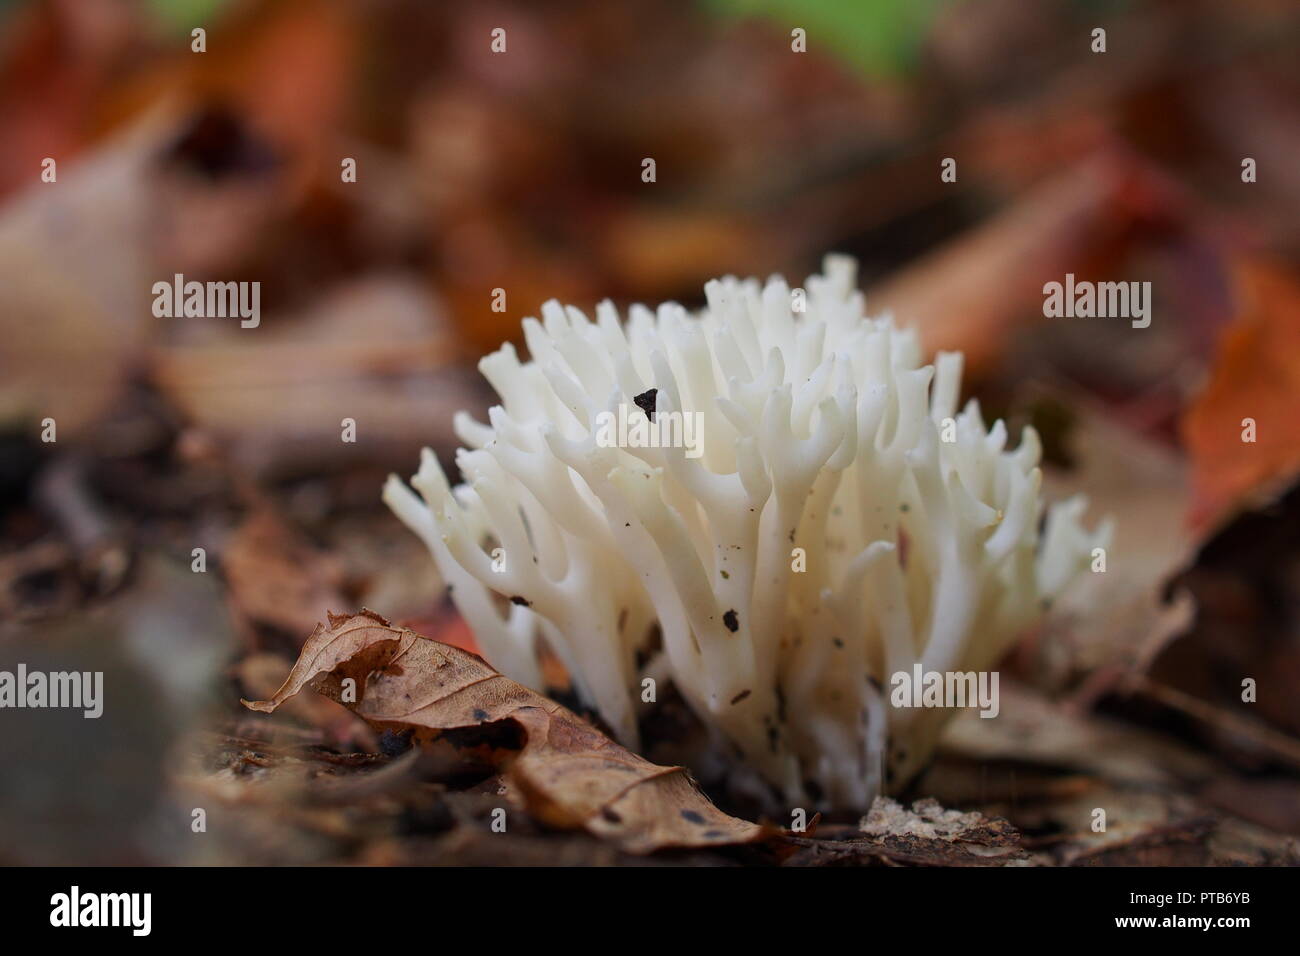 Artomyces pyxidatus (Coral fungus) growing through the leaf litter, Gatineau Park, Quebec, Canada. Stock Photo